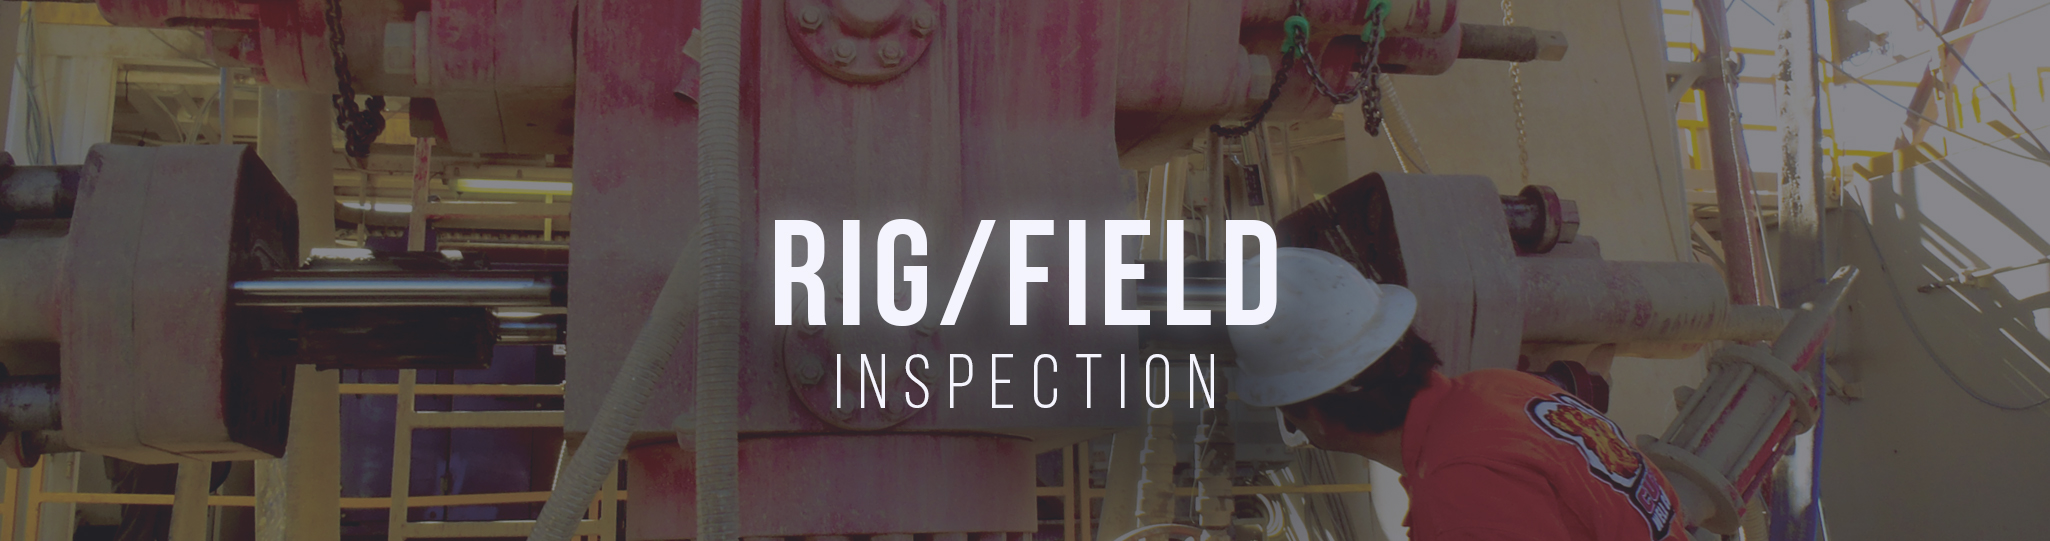 Rig Field Inspection